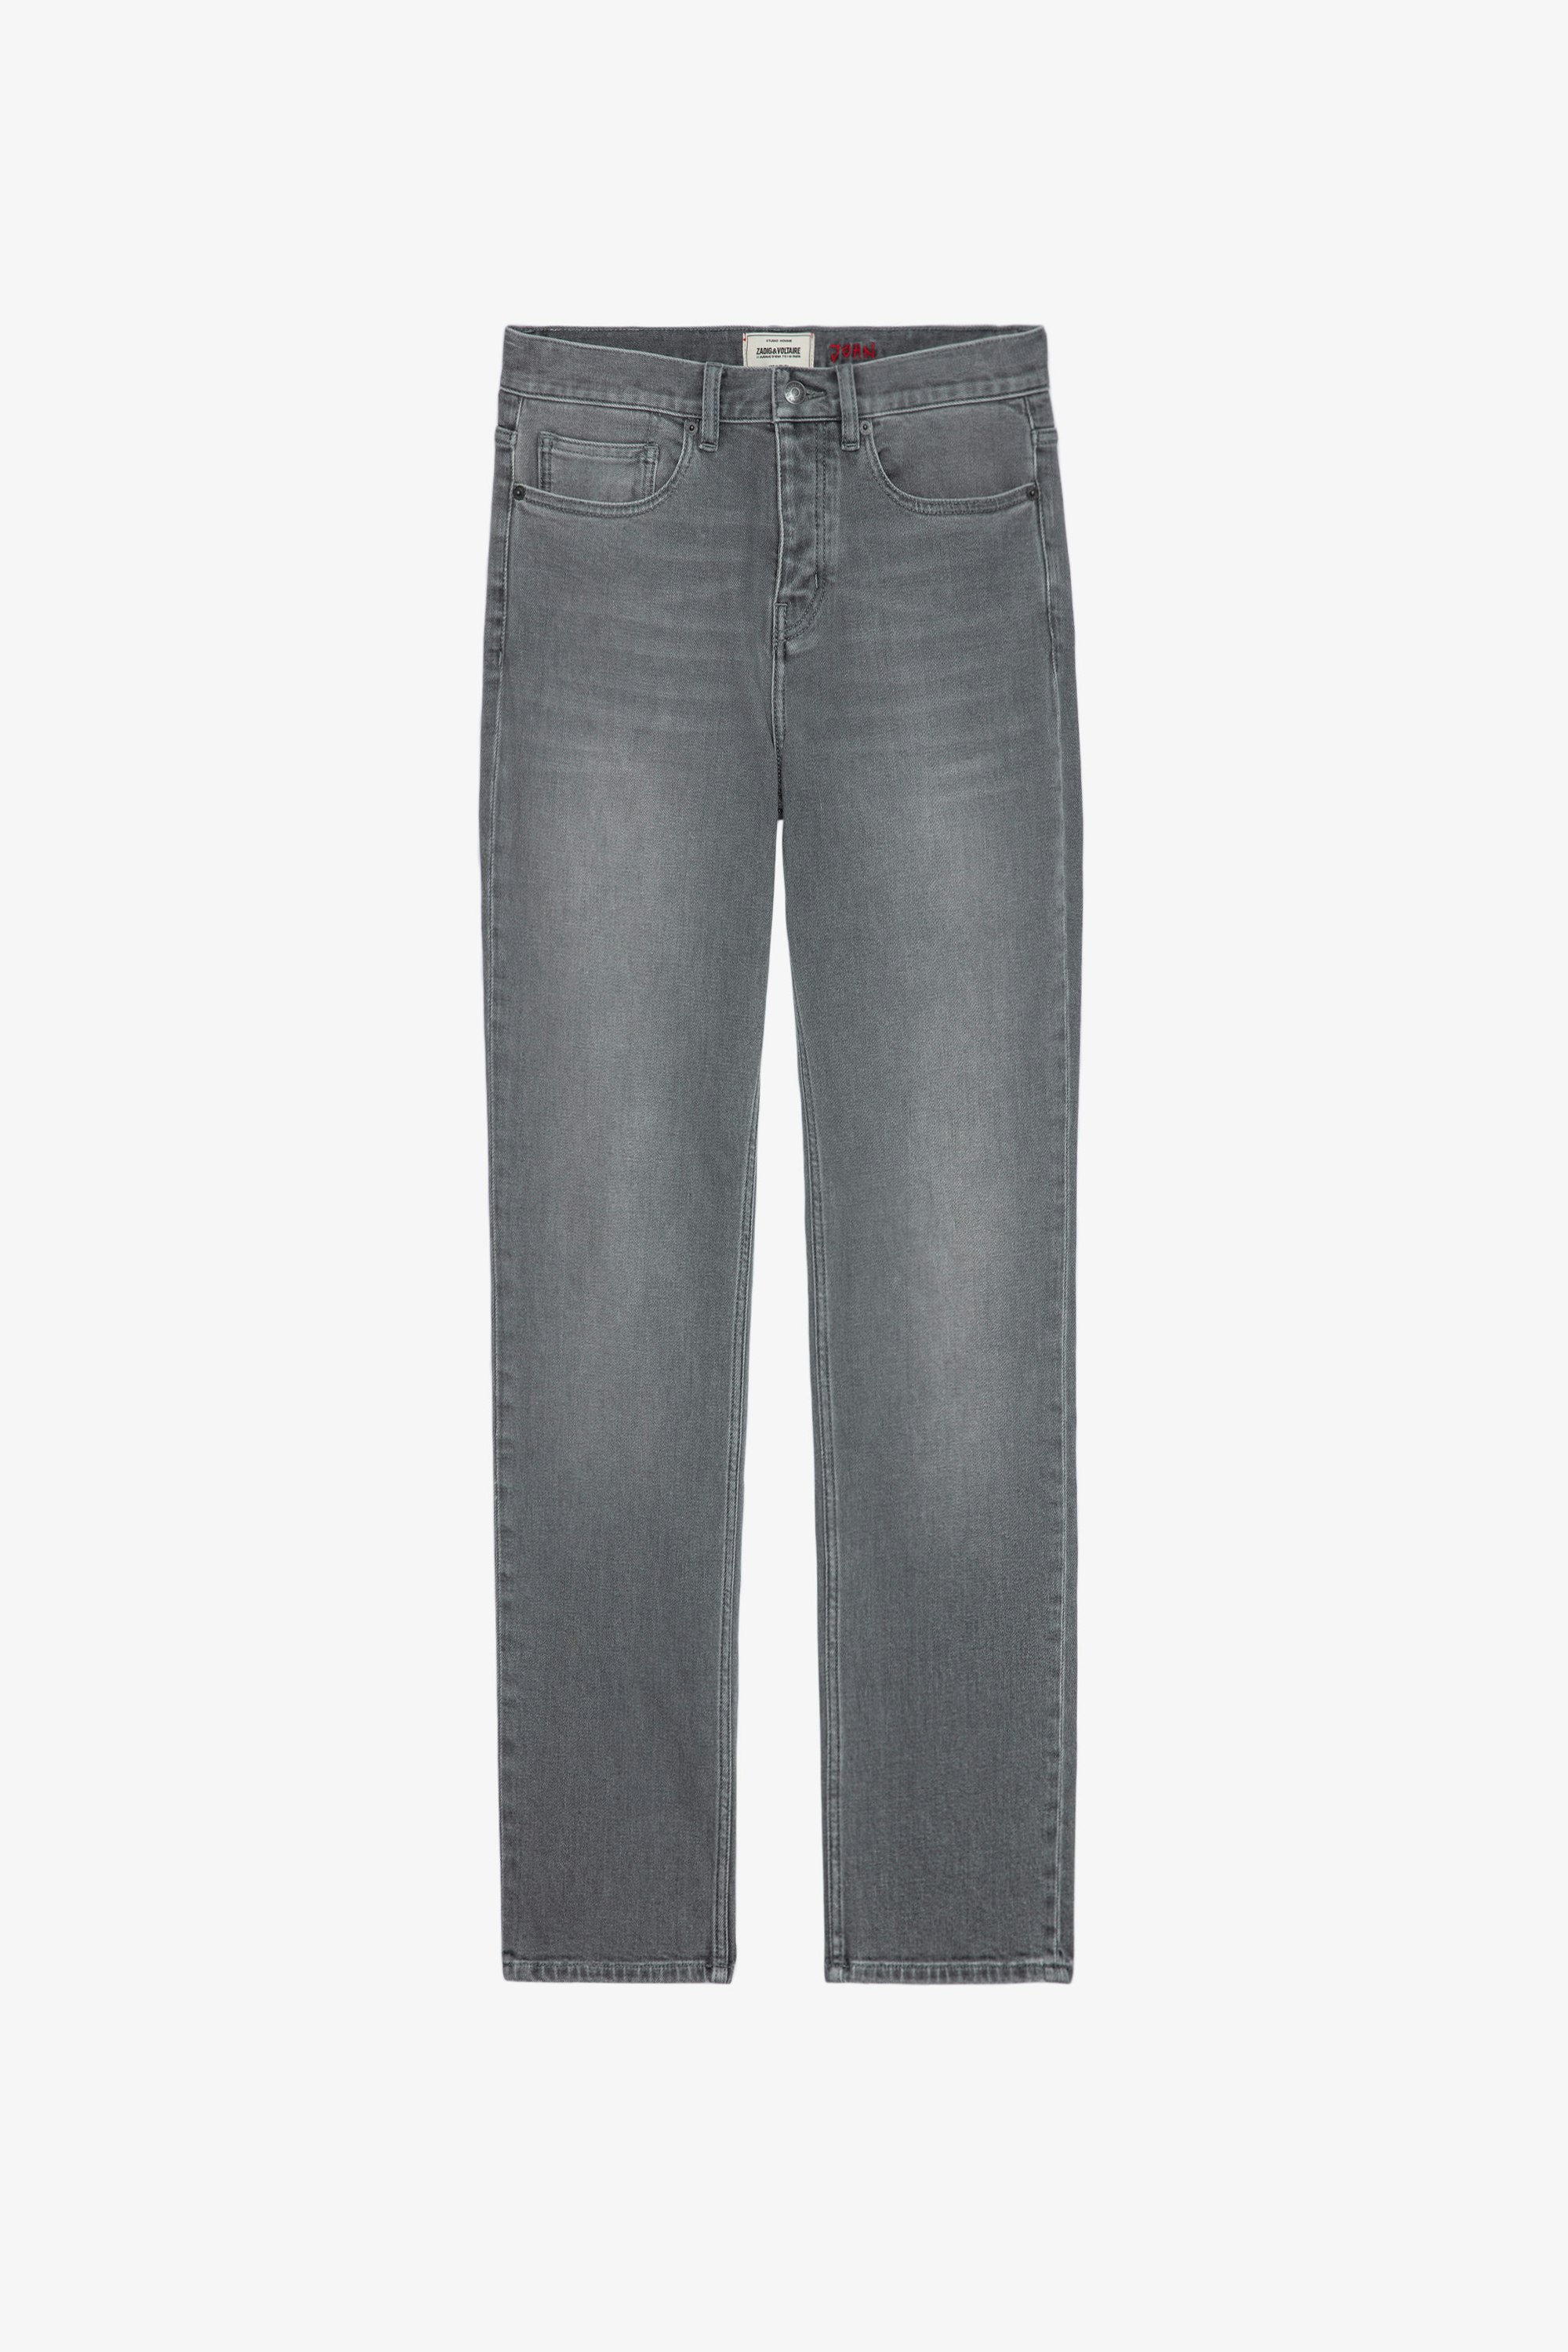 John Jeans Men’s straight-cut grey denim jeans